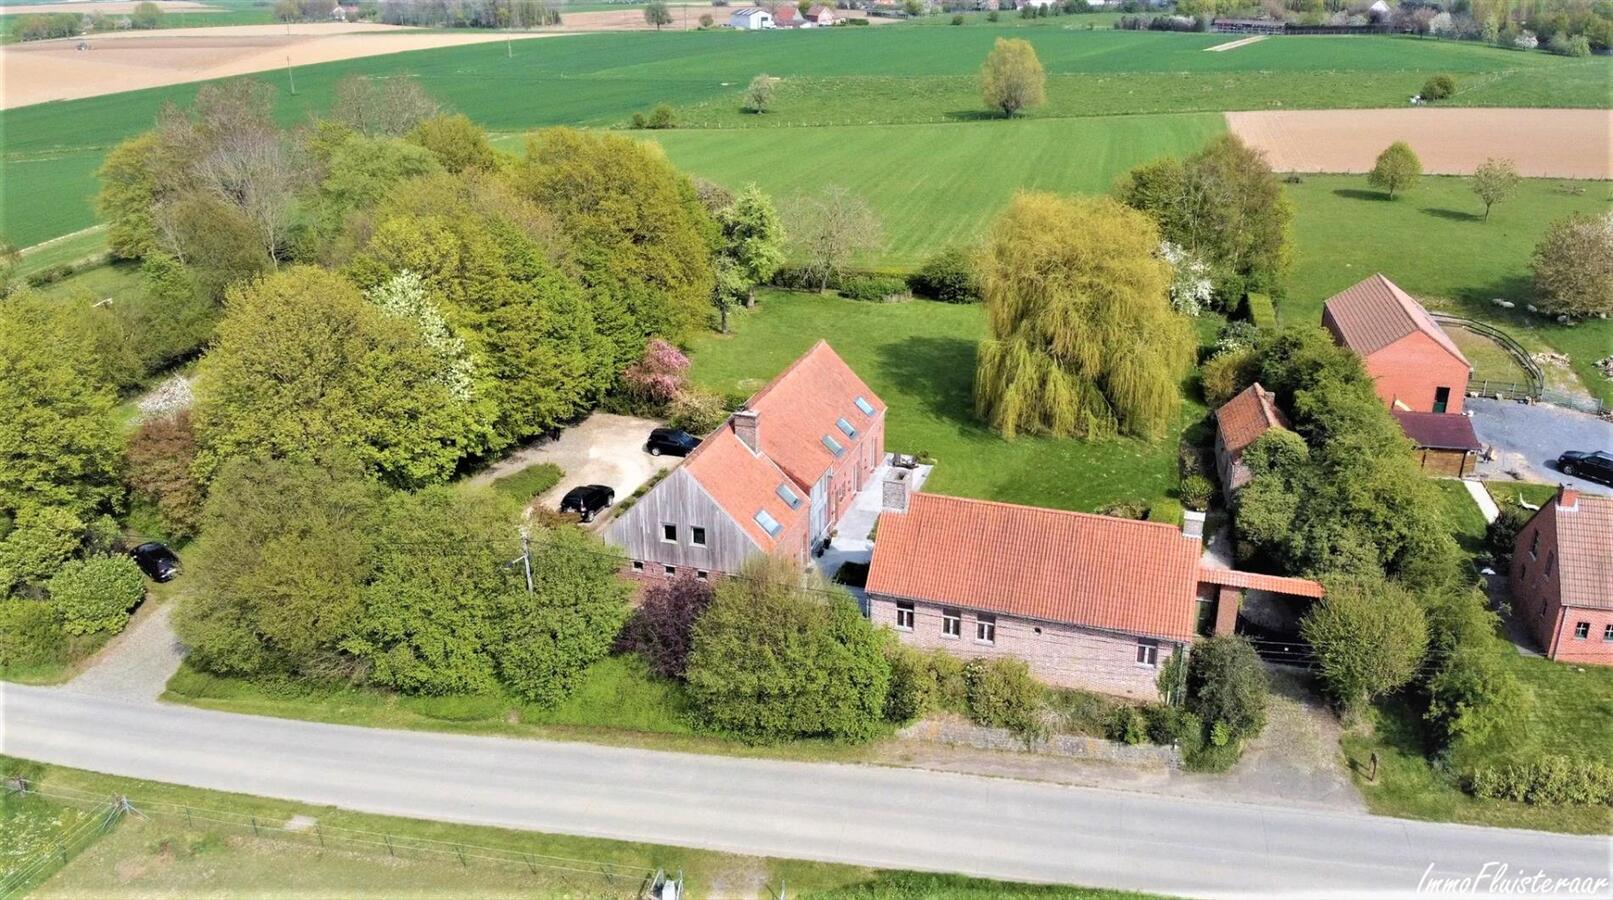 Villa sold in Elzele